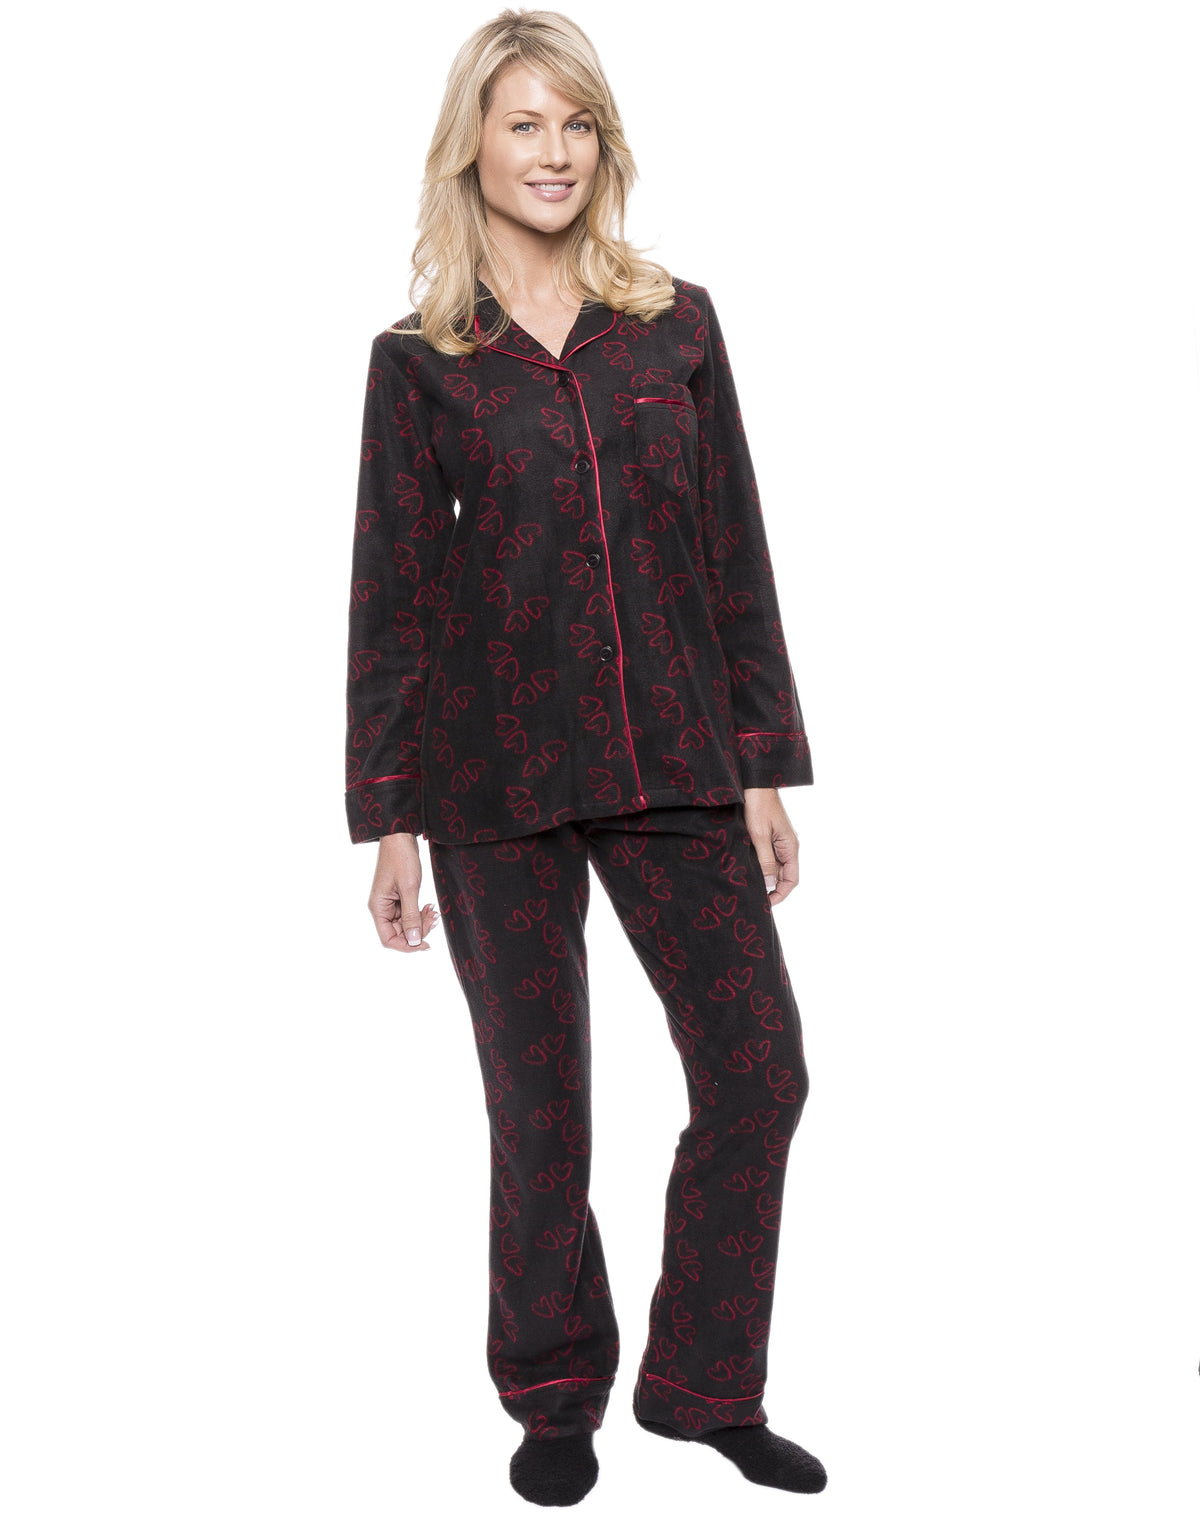 Womens Microfleece Pajama Sleepwear Set - Hearts Black/Red